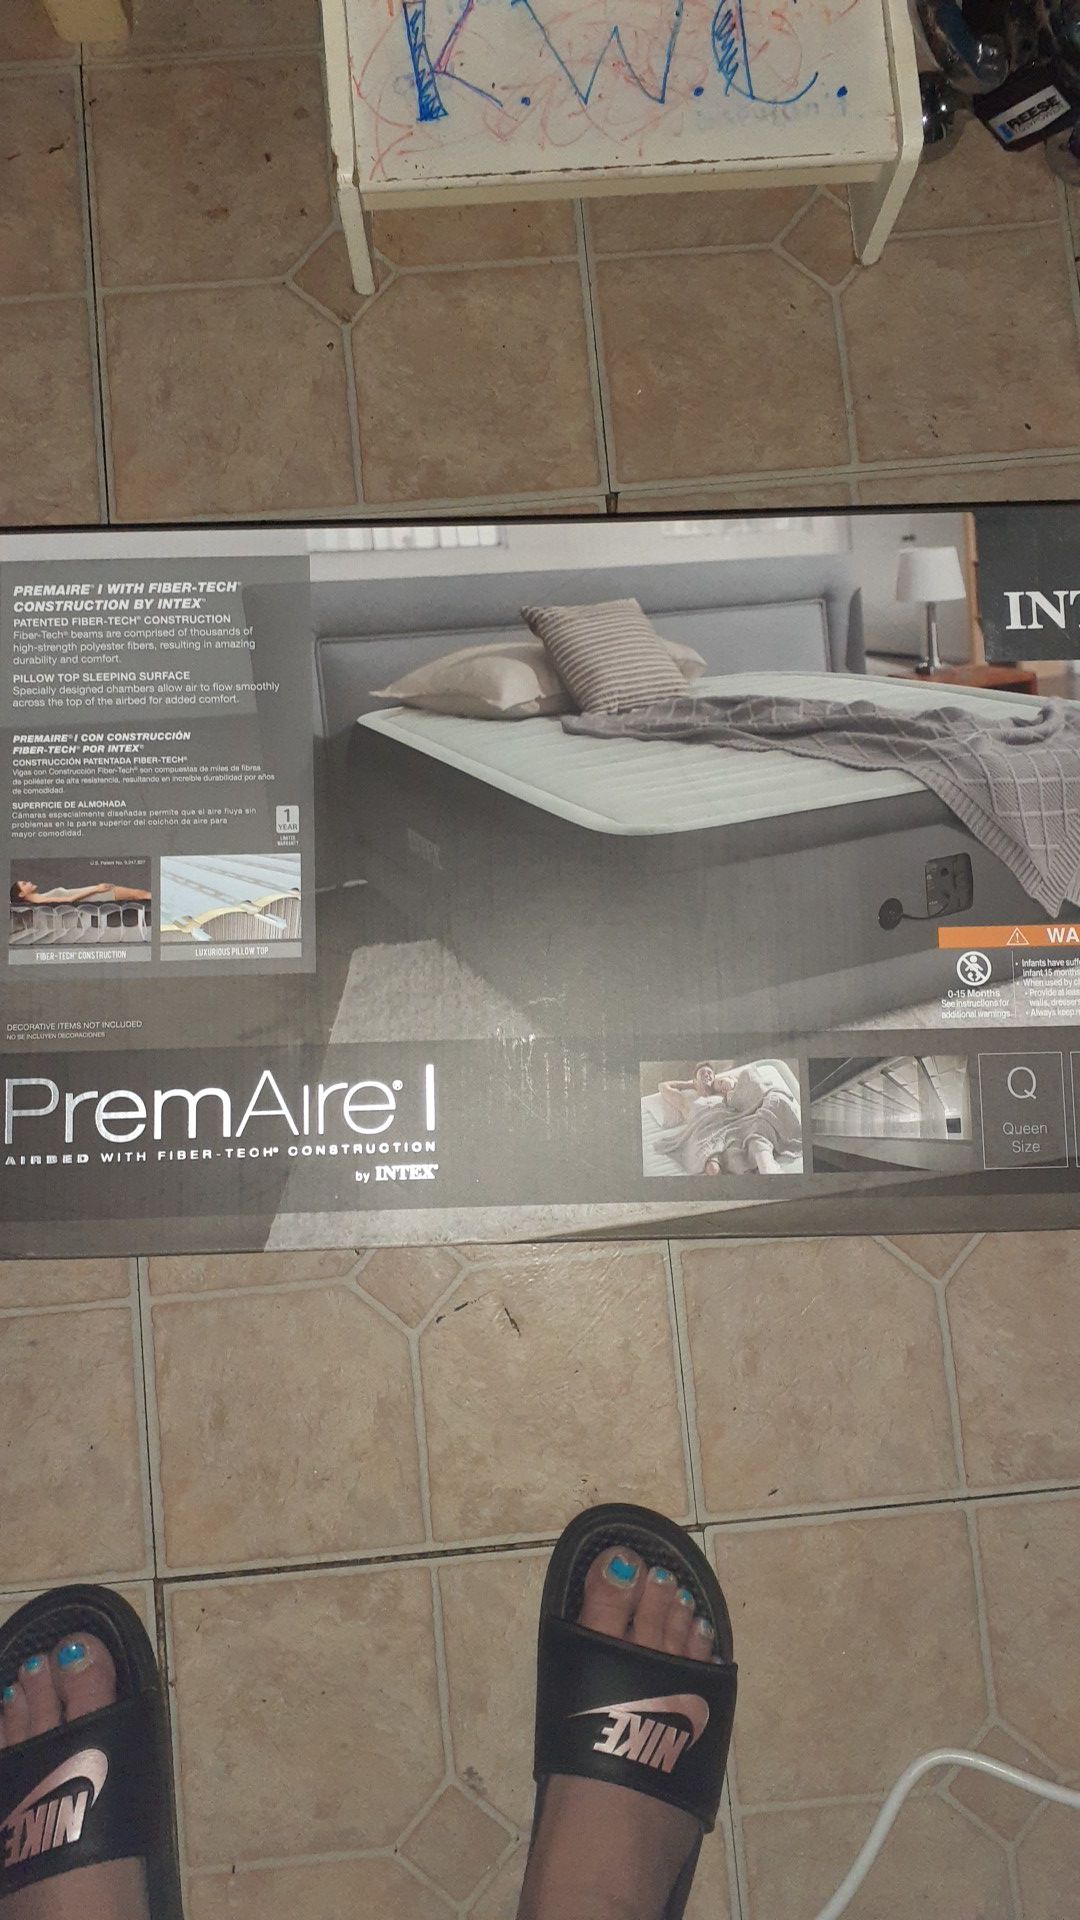 Intex premiere air mattress never been open it's top of the line